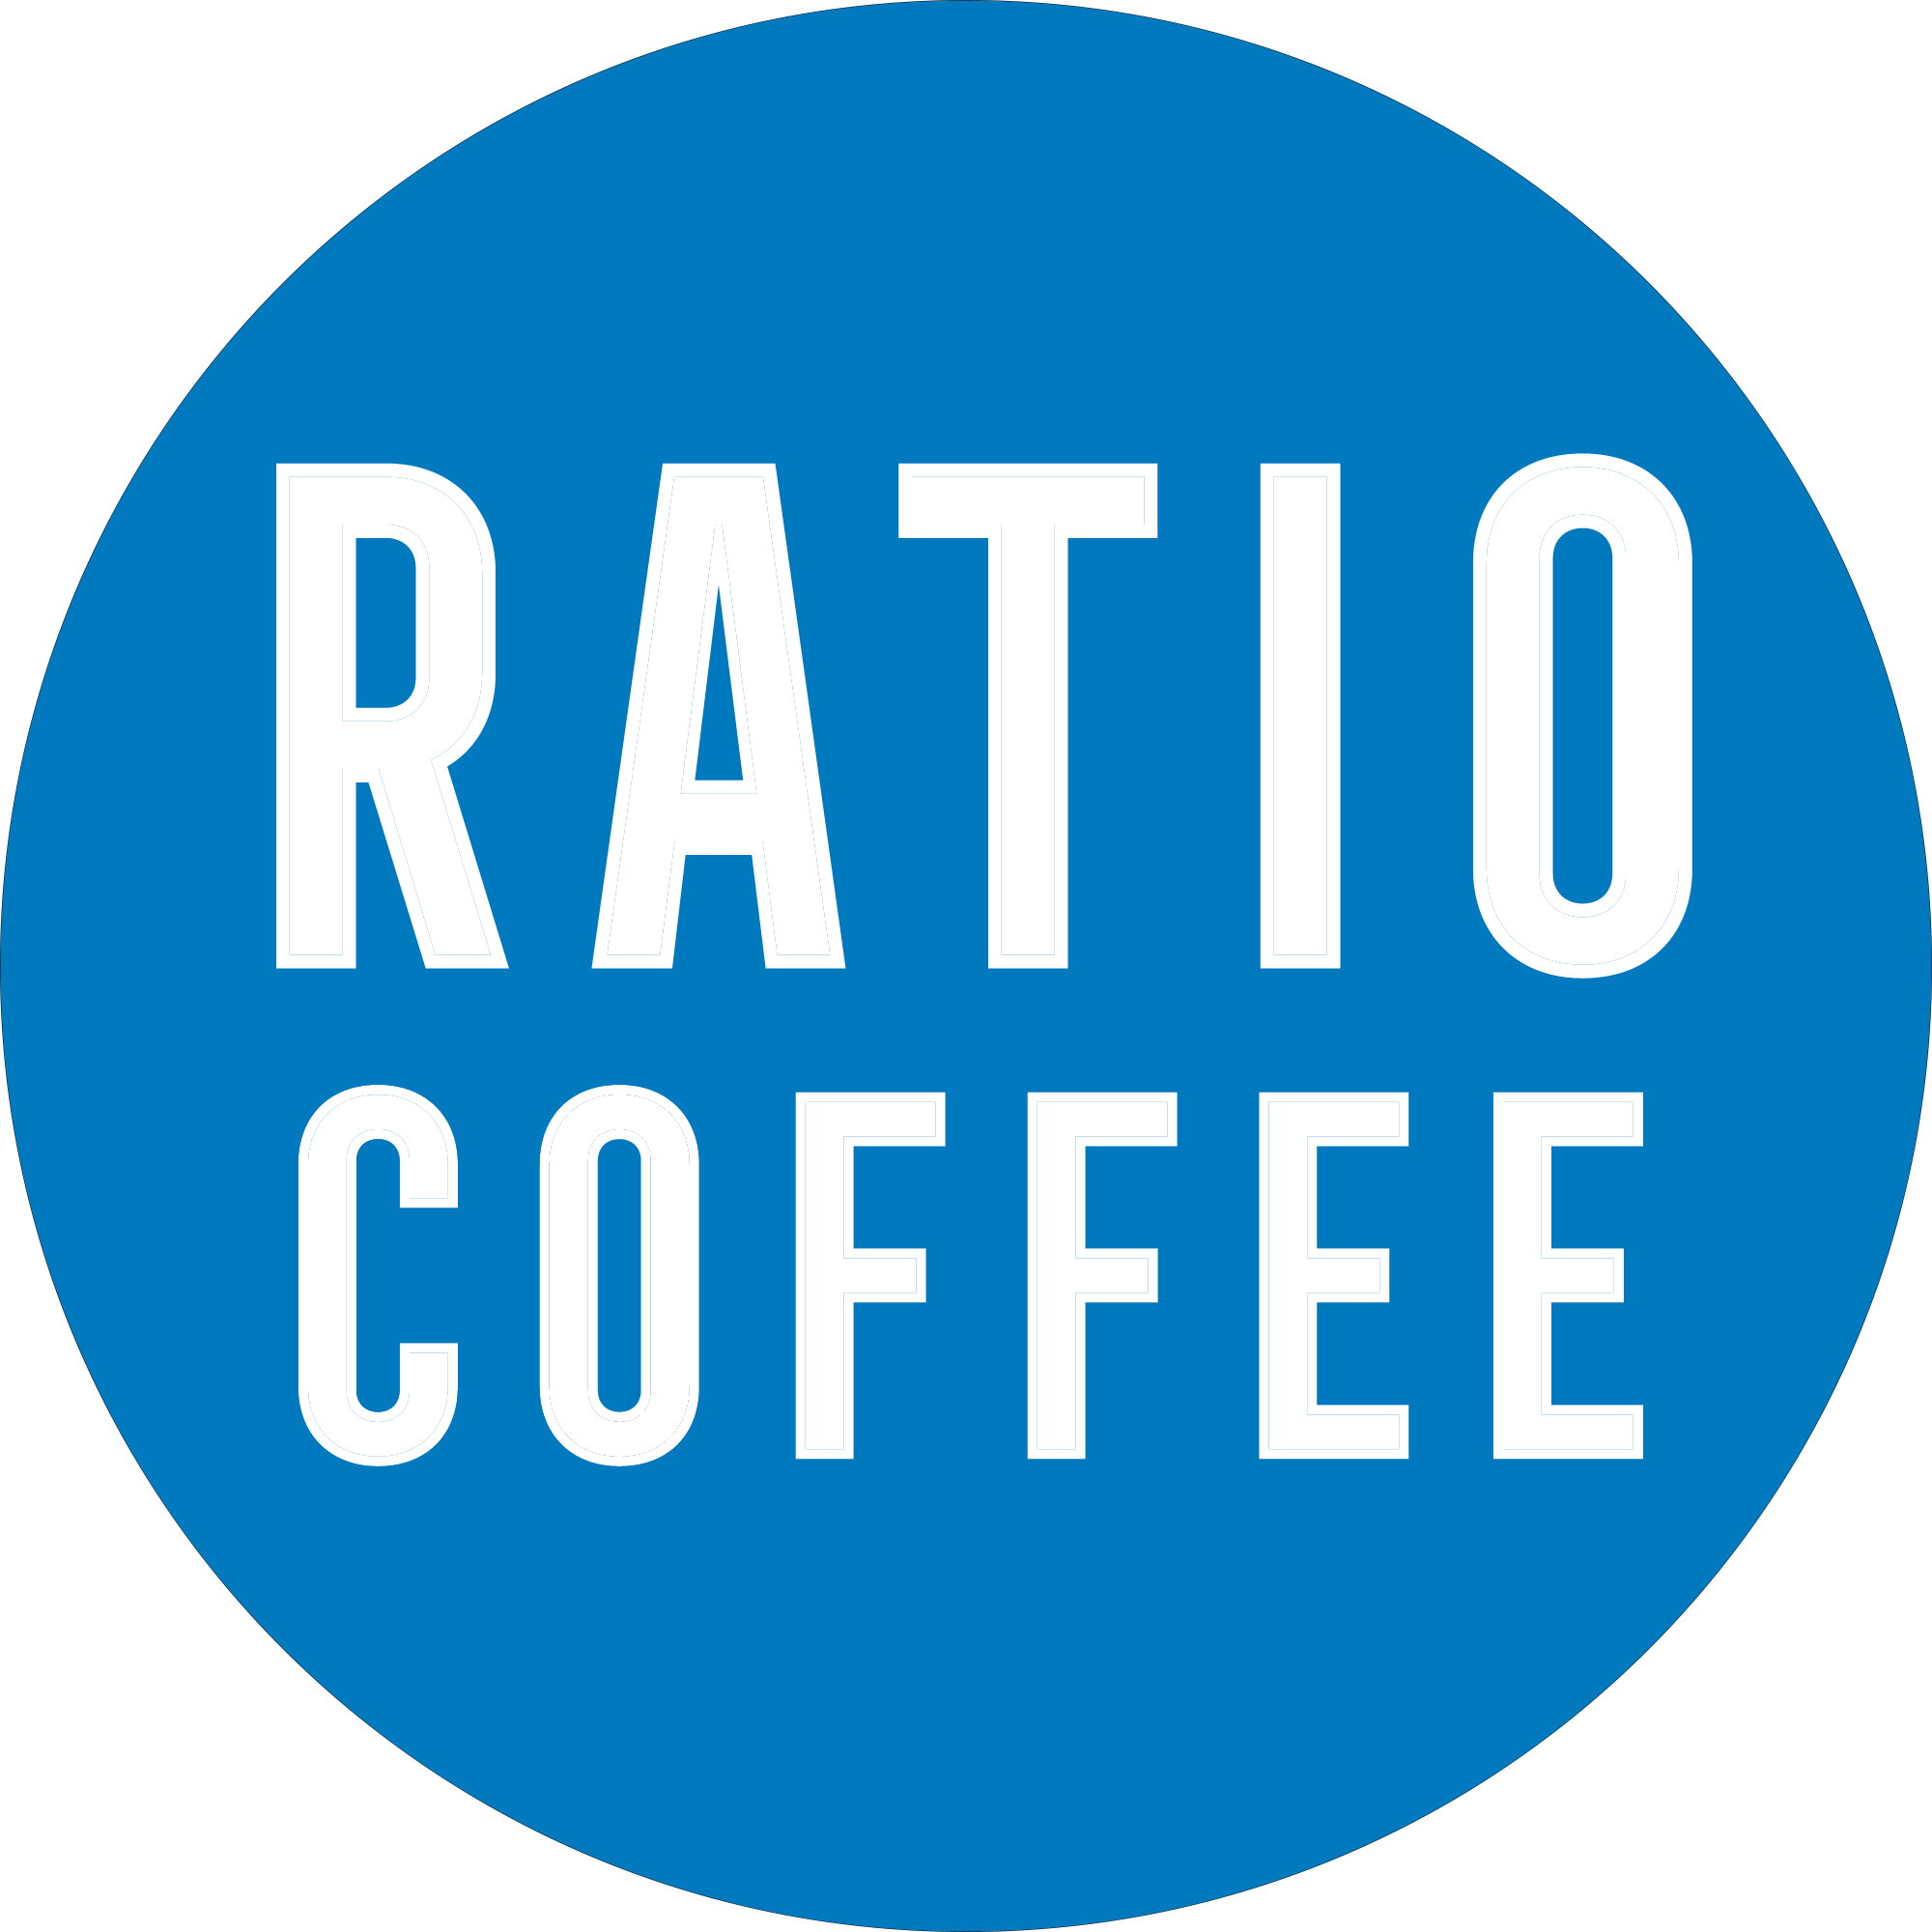 Coffee Salzburg, Specialty Coffee Shop, Coffee, Third Wave - Ratio Coffee - Salzburg, Salzburg